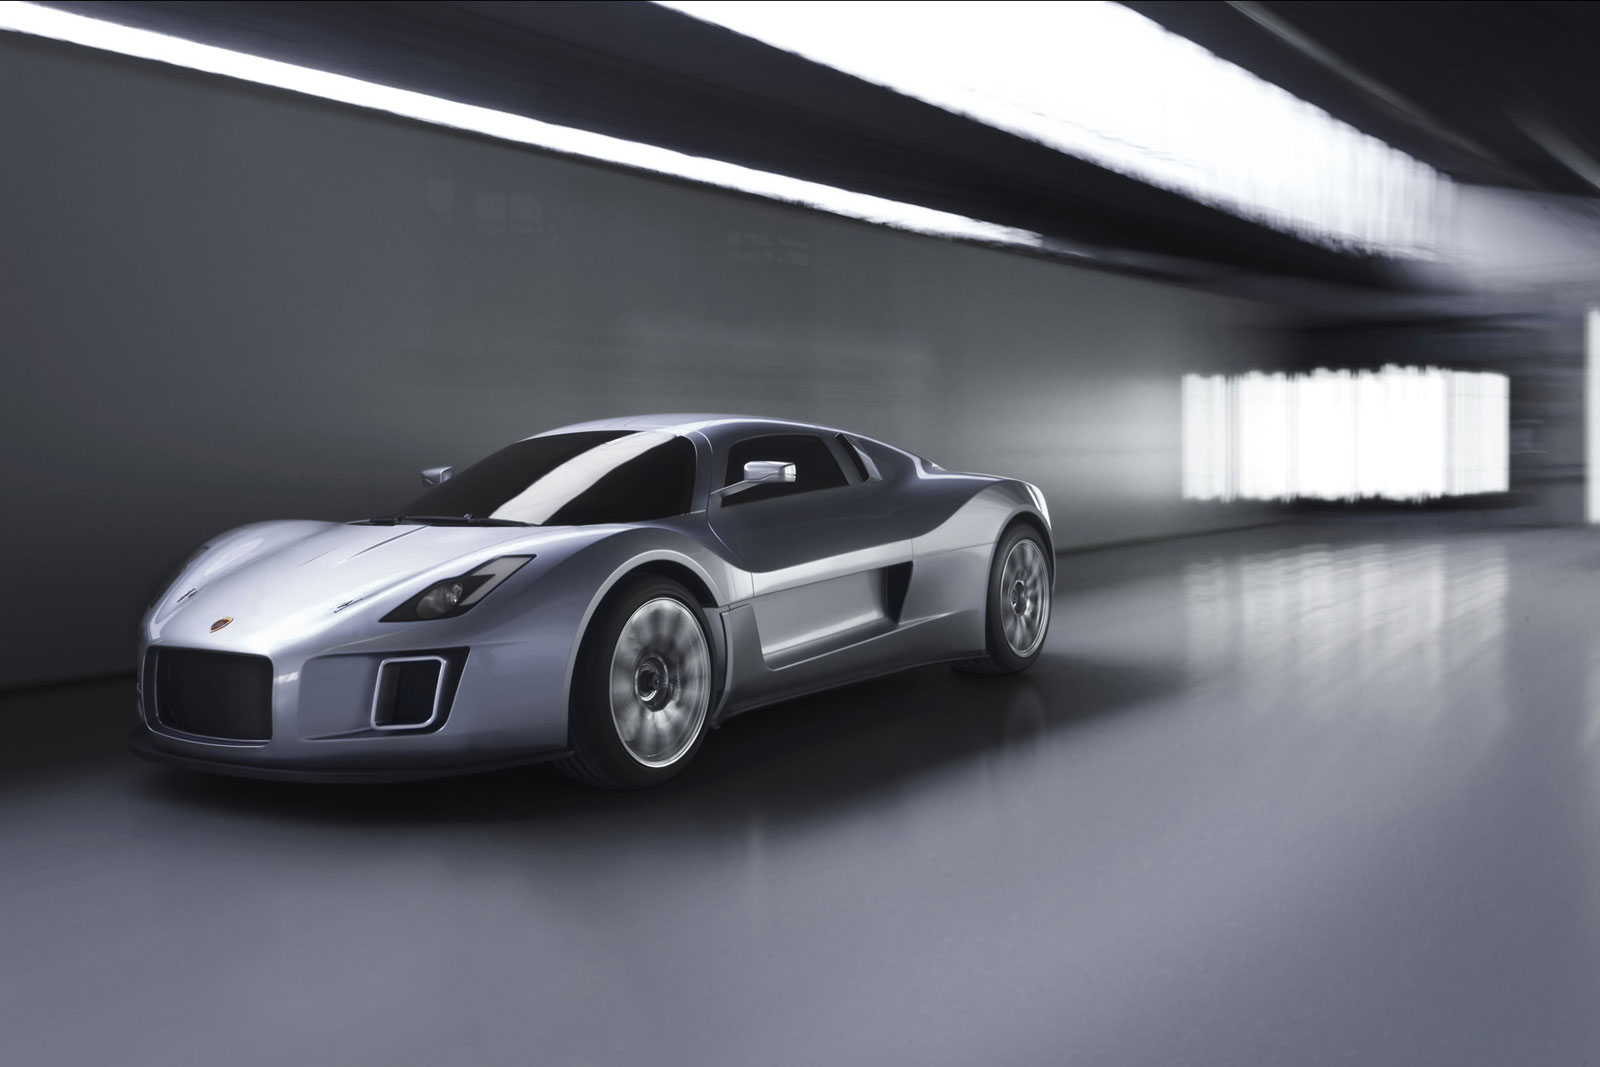 Infiniti Sports car set for Debut Within 3 Years - GTspirit